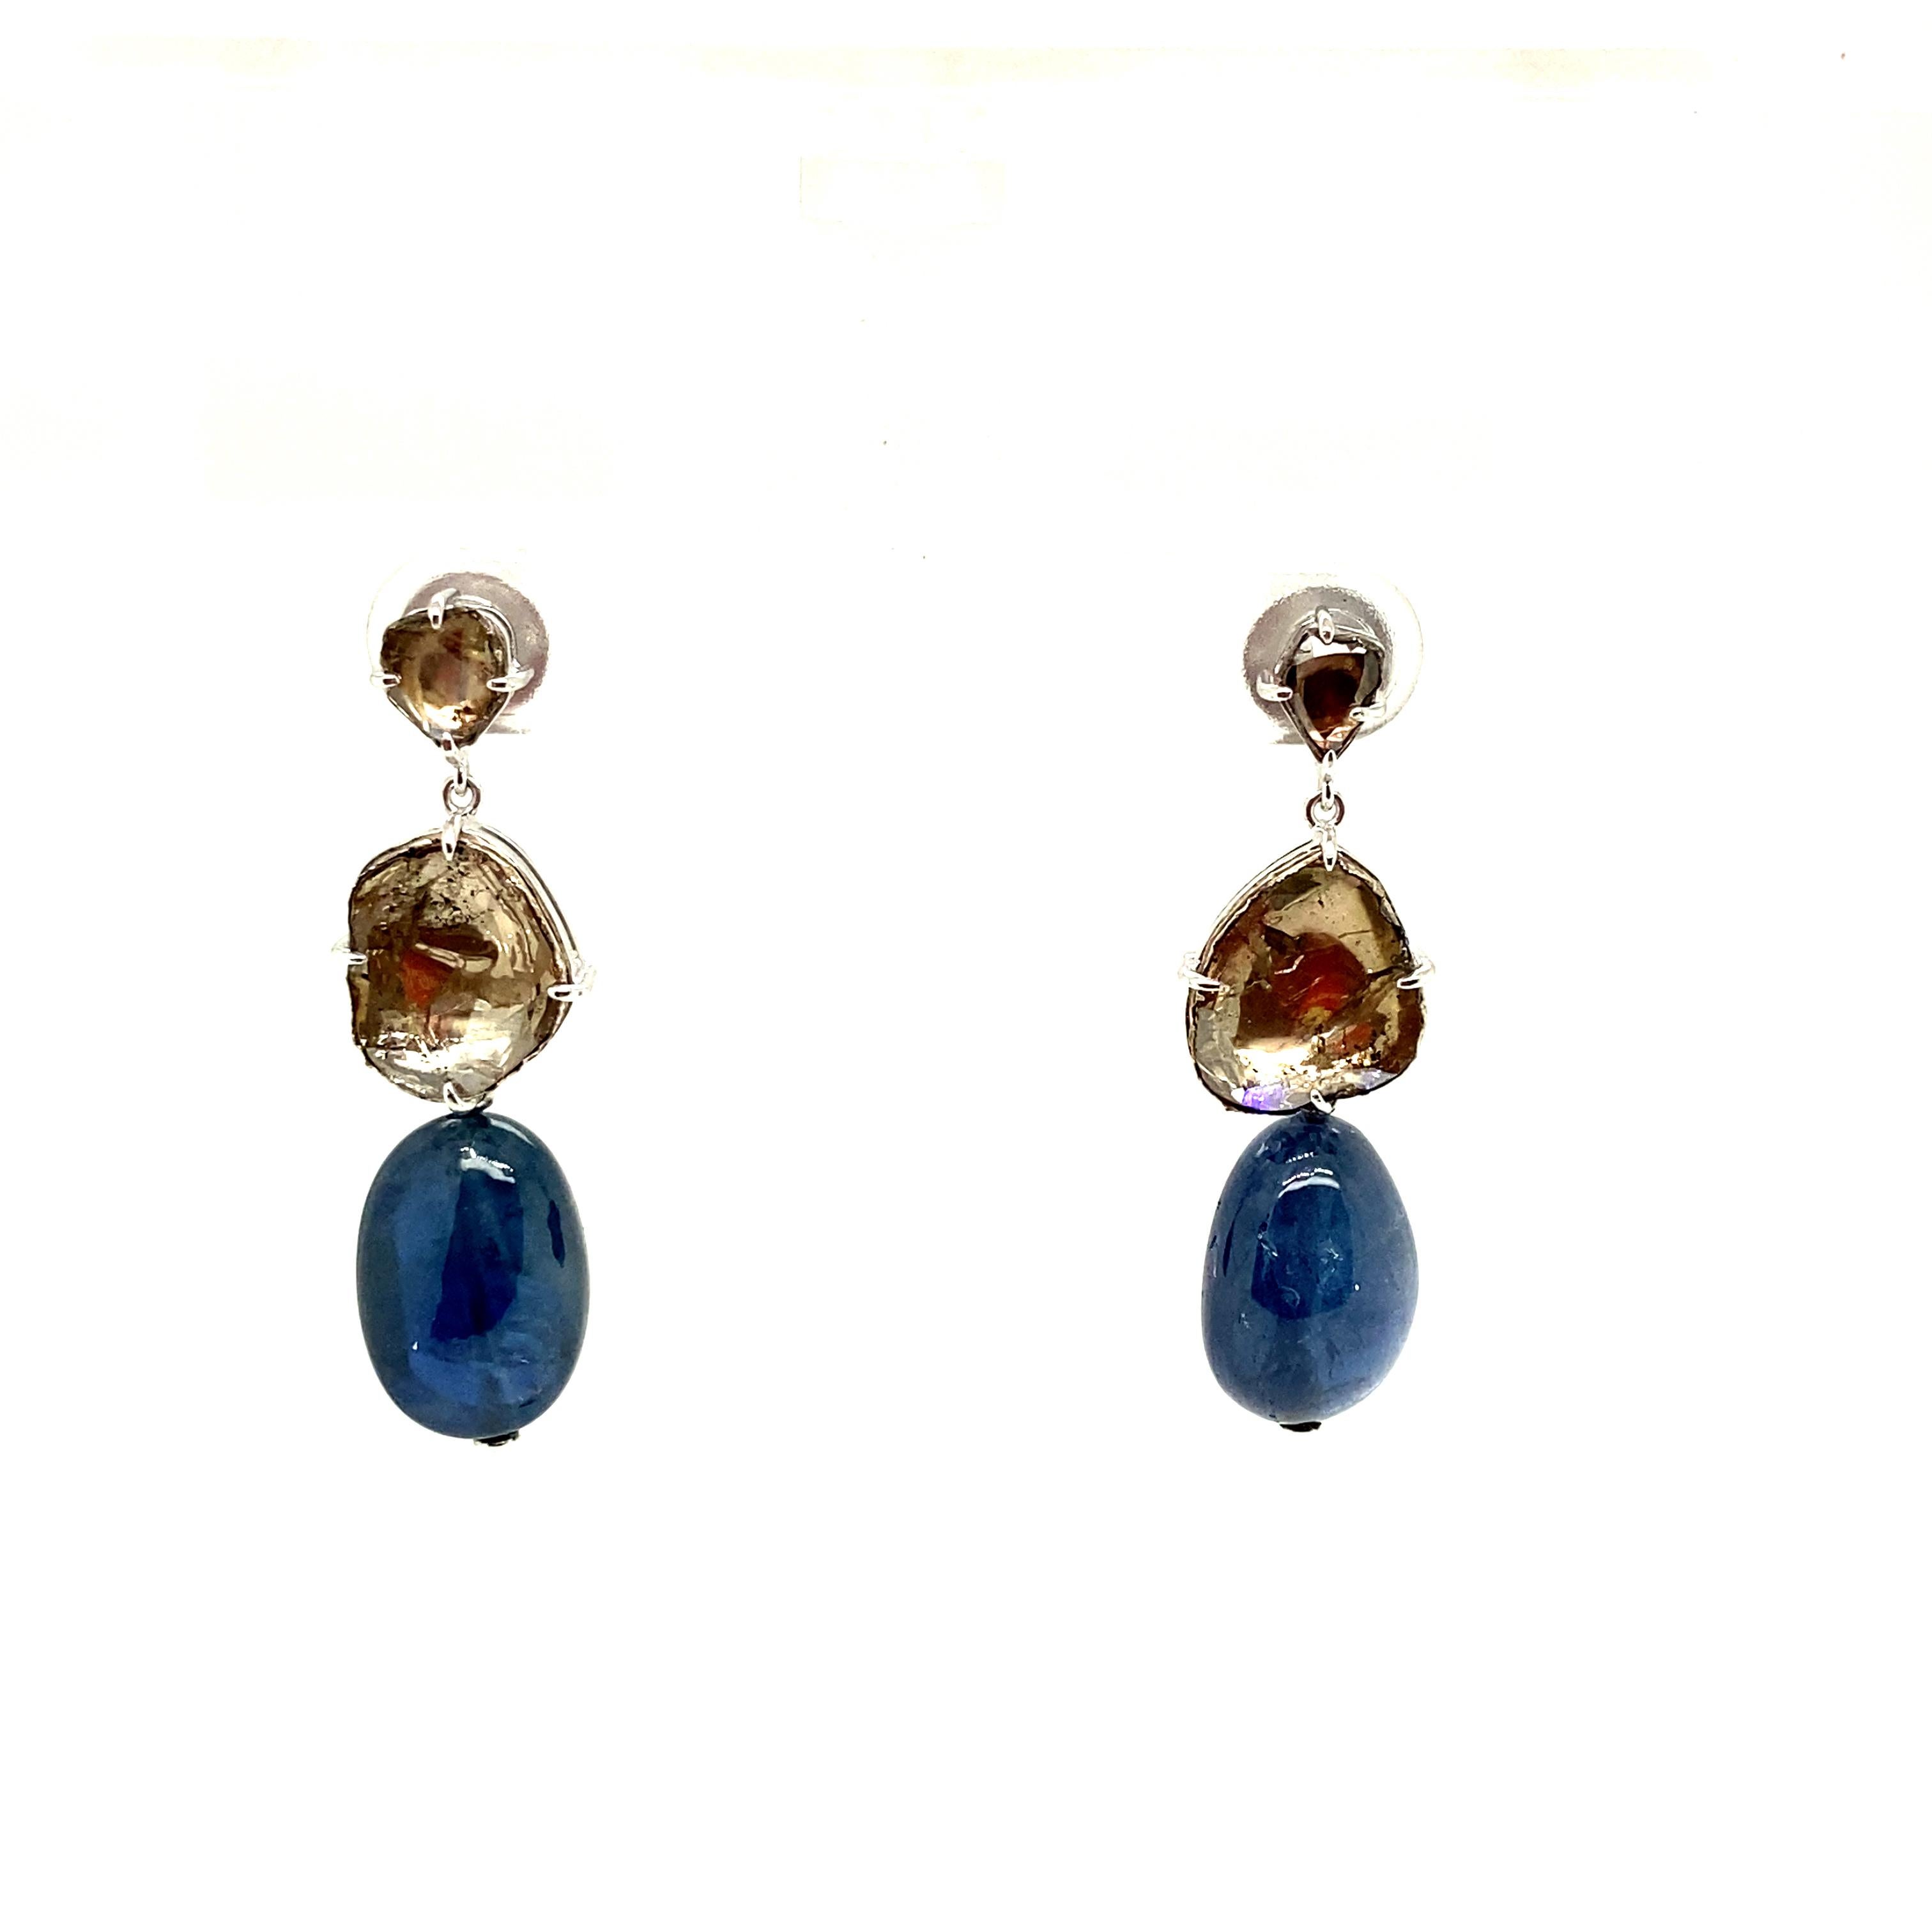 23.88 Carat Burma No Heat Sapphire Drops and Rose Cut Diamond Gold Earrings:

A beautiful pair of earrings, it features a pair of Burmese unheated blue sapphire drops weighing 23.88 carat topped by rose-cut diamonds weighing 4.21 carat. The sapphire